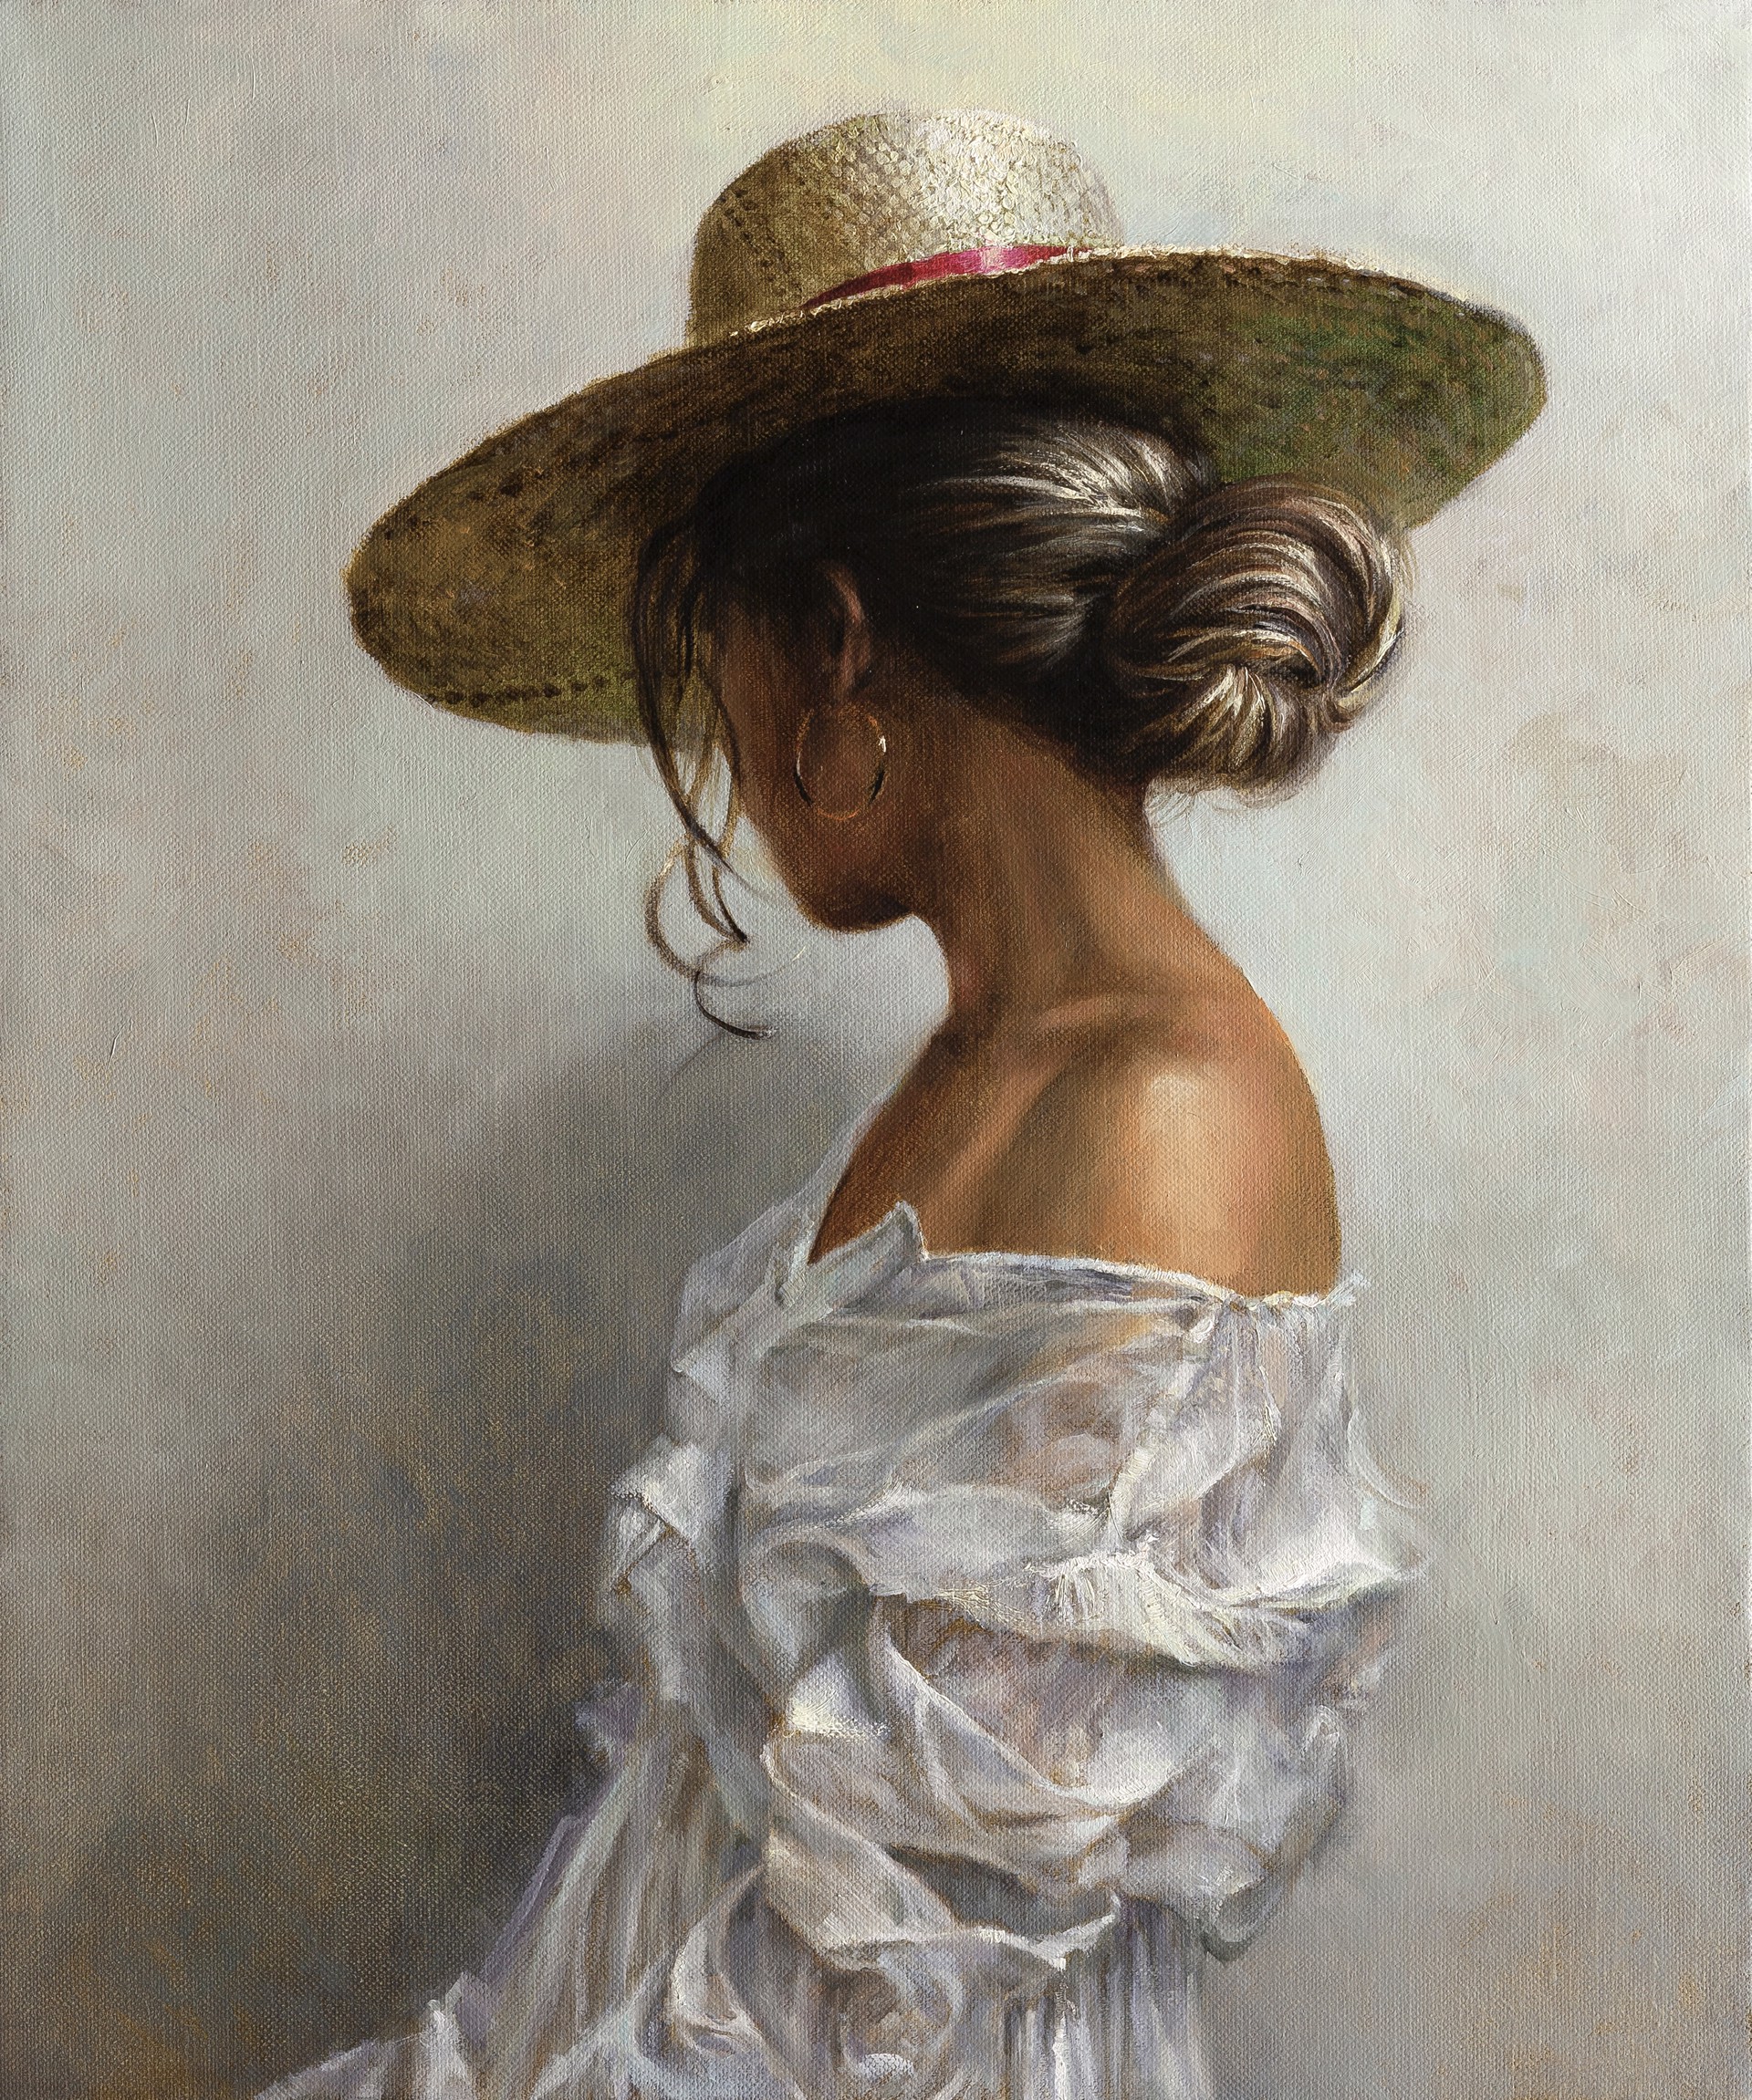 "Girl in Straw Hat" by Oleg Trofimov